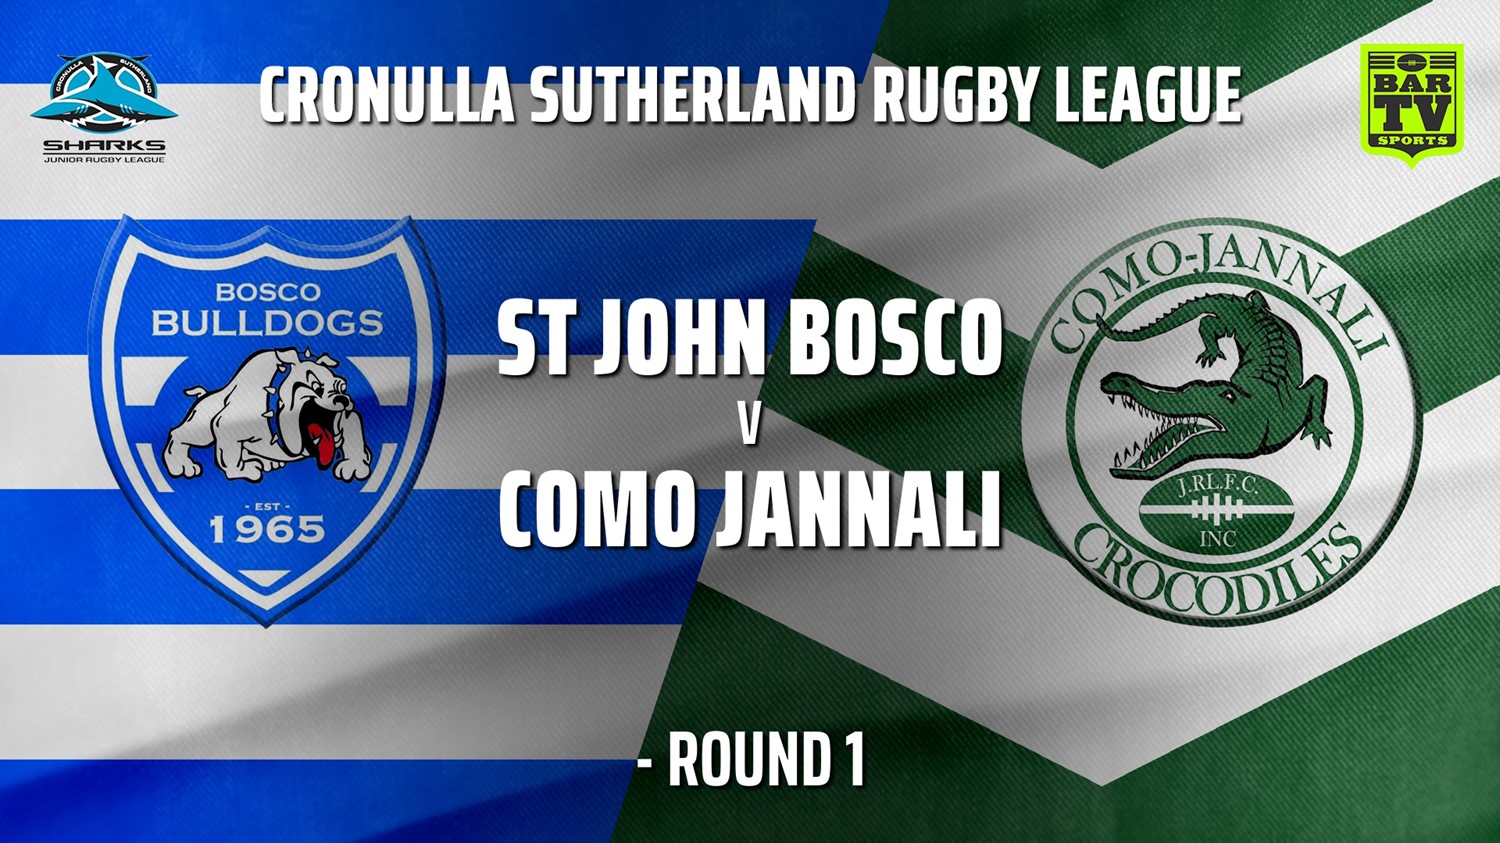 210501-Cronulla JRL Under 9s Silver Round 1 - St John Bosco Bulldogs v Como Jannali Crocodiles (1) Minigame Slate Image